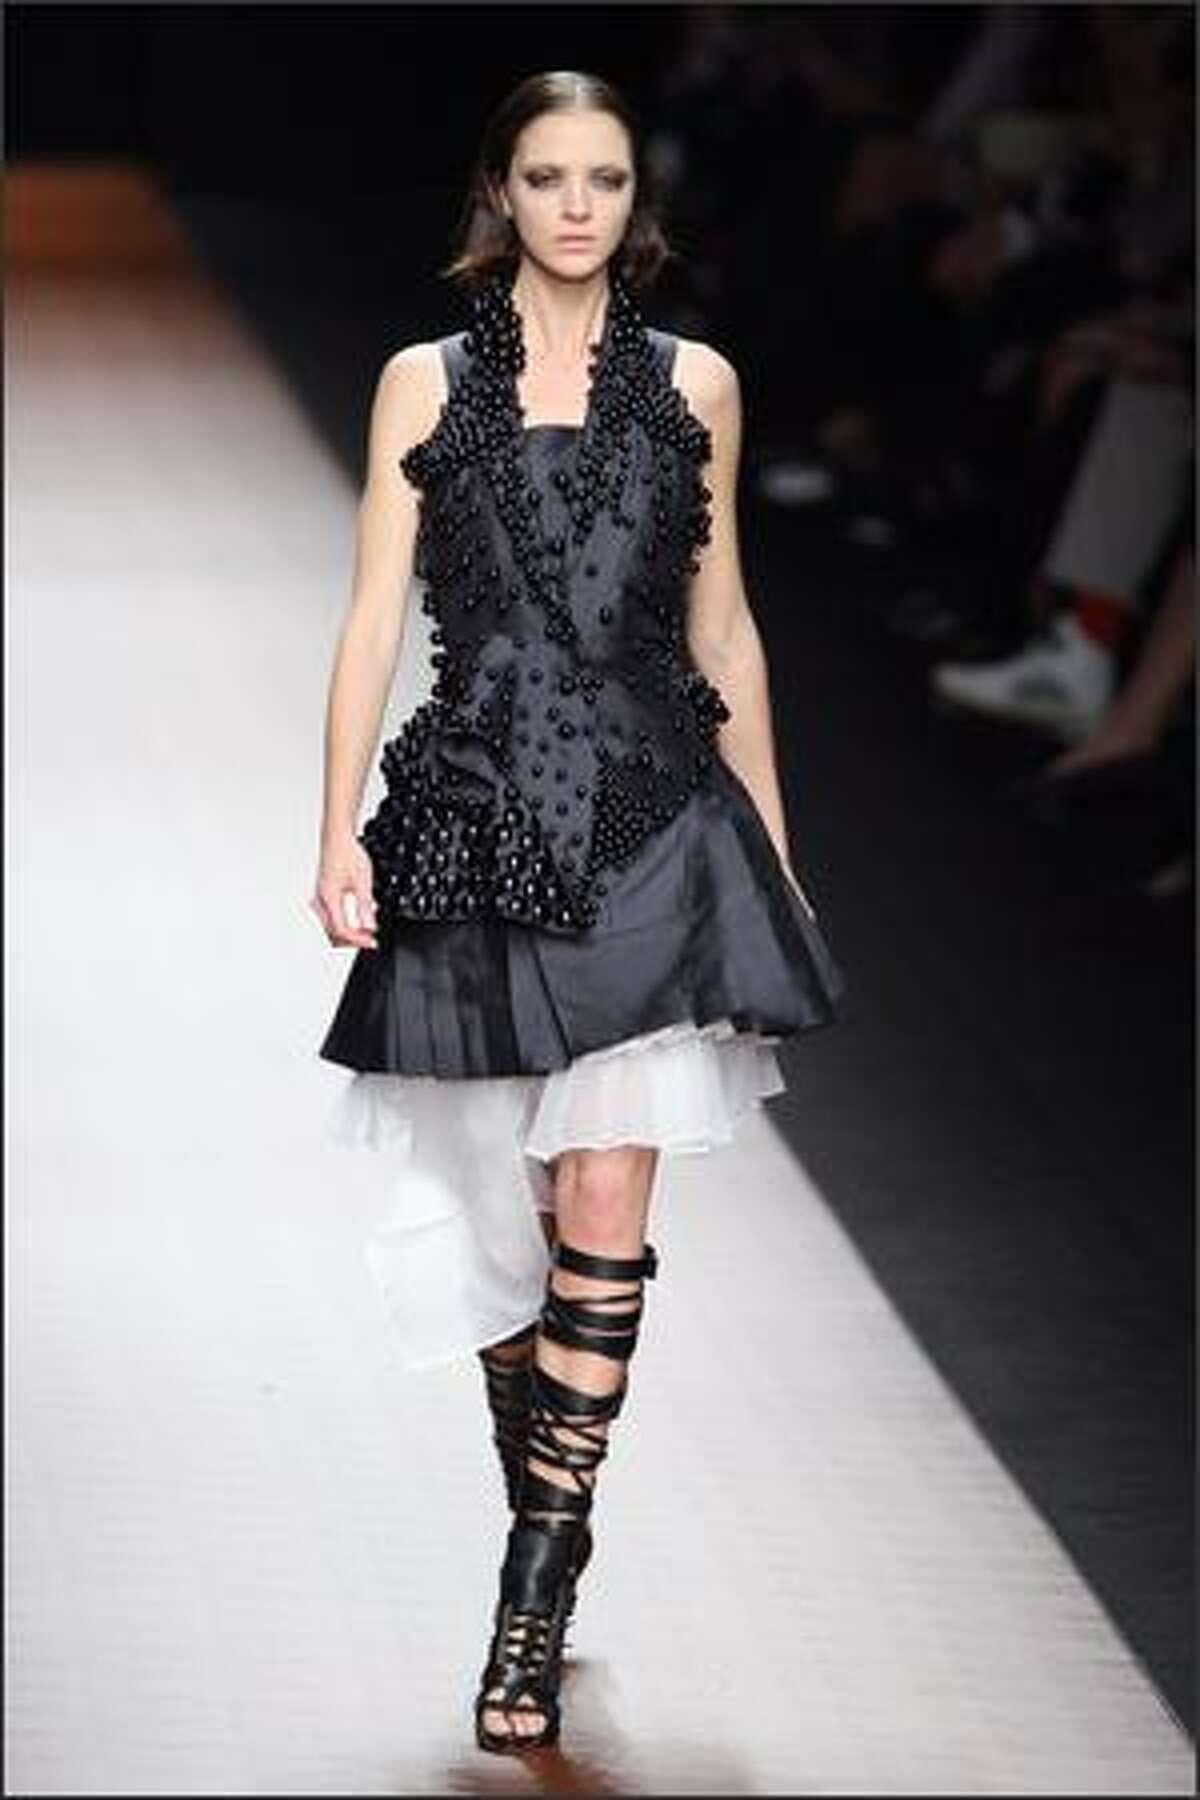 Italian model Maria Carla Boscono presents a creation by Ricardo Tisci for Givenchy.